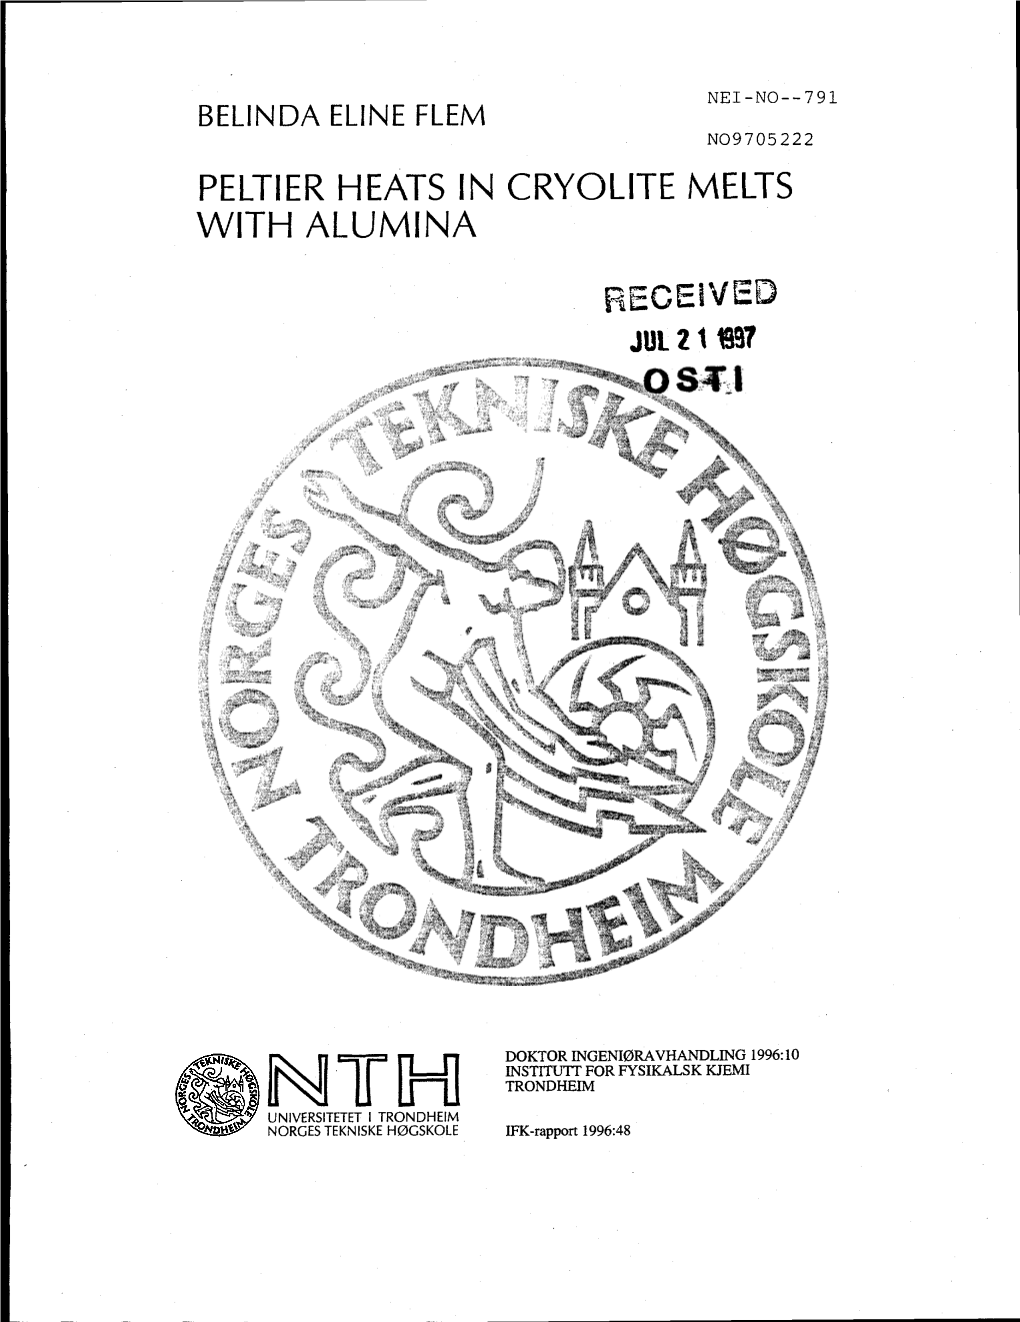 Peltier Heats in Cryolite Melts with Alumina Received Jul 211997